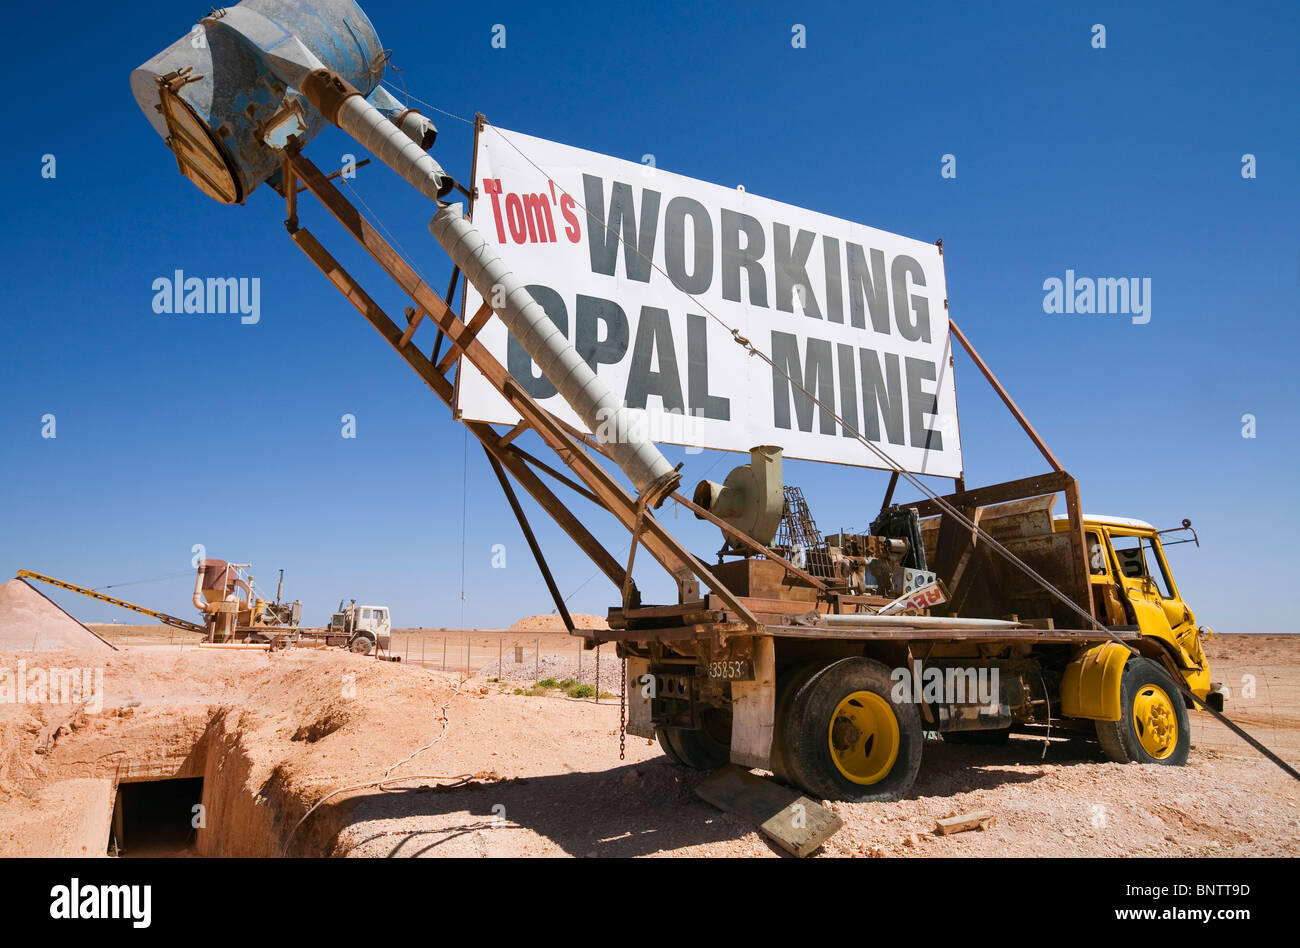 Tom's working opal mine. Coober Pedy, South Australia. Stock Photo